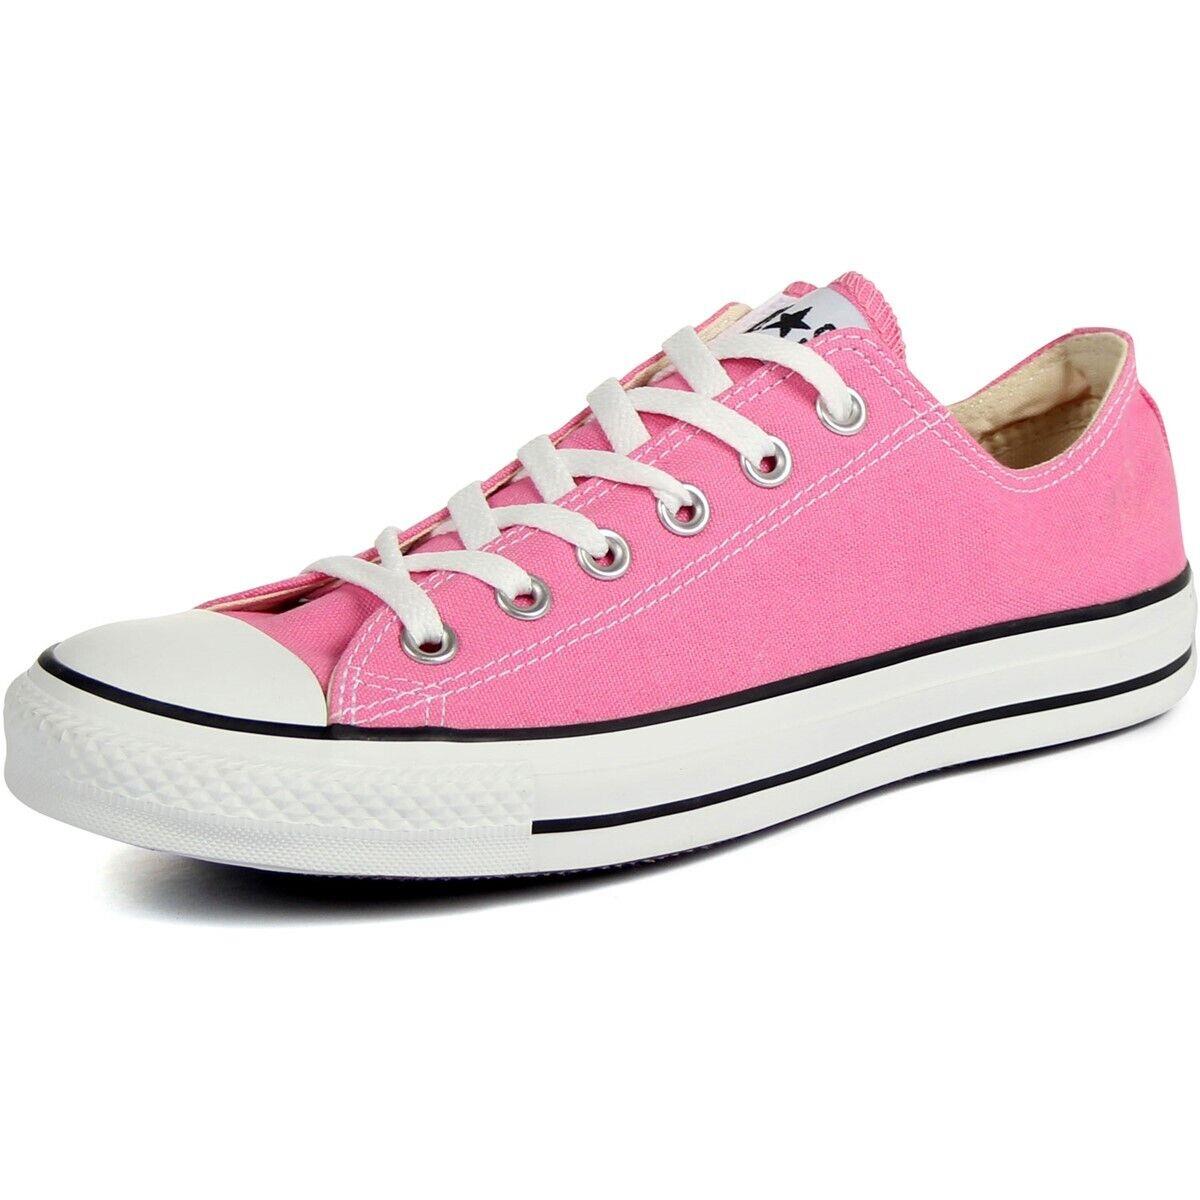 Converse All Star Chuck Taylor Shoes Canvas OX Men Women Pink M9007 Unisex